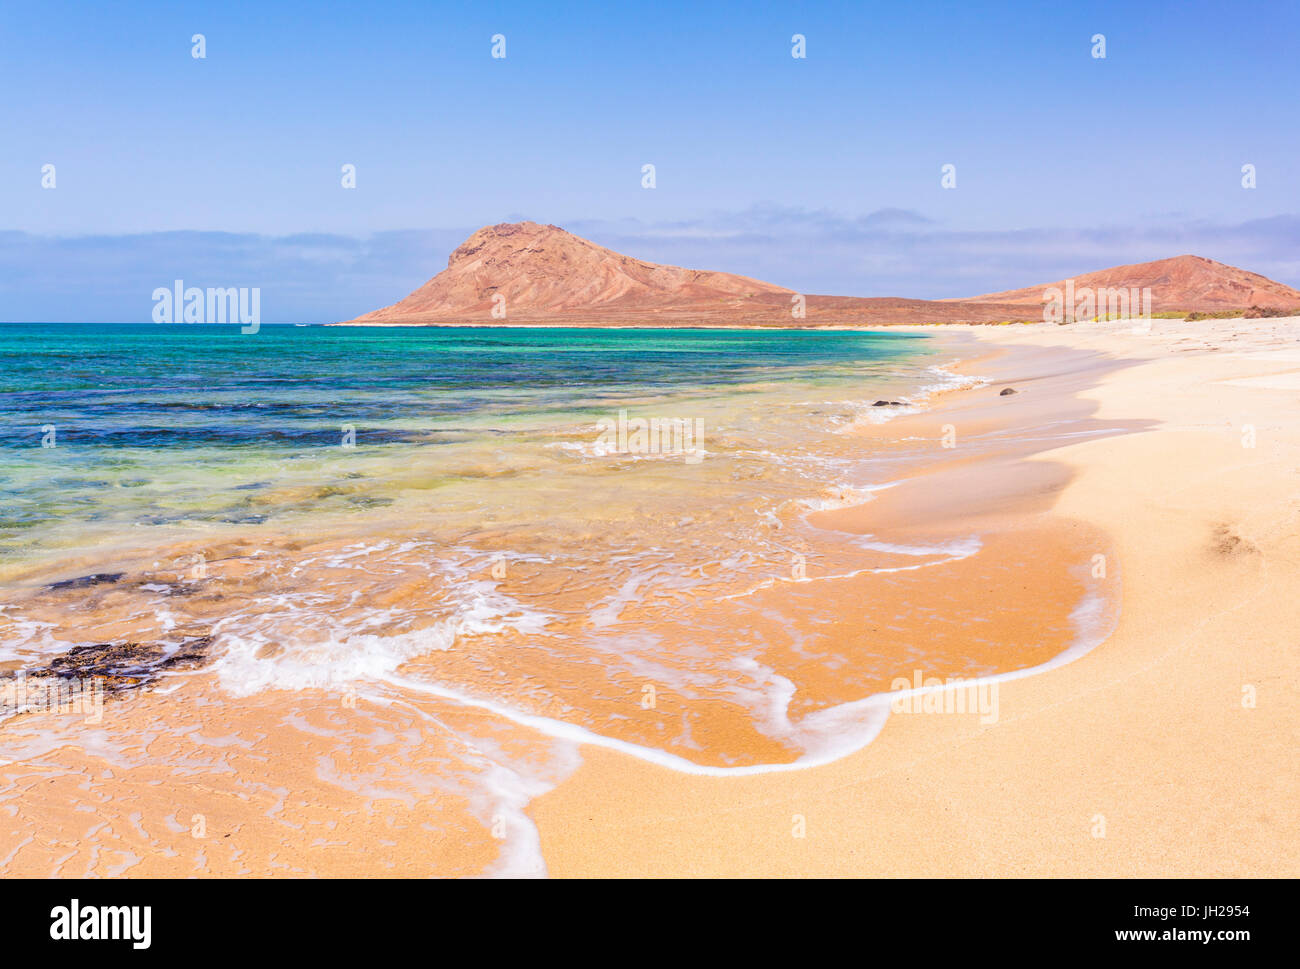 Empty sandy beach and bay near Monte Leao mountain (Sleeping Lion mountain), Sal Island, Cape Verde, Atlantic, Africa Stock Photo